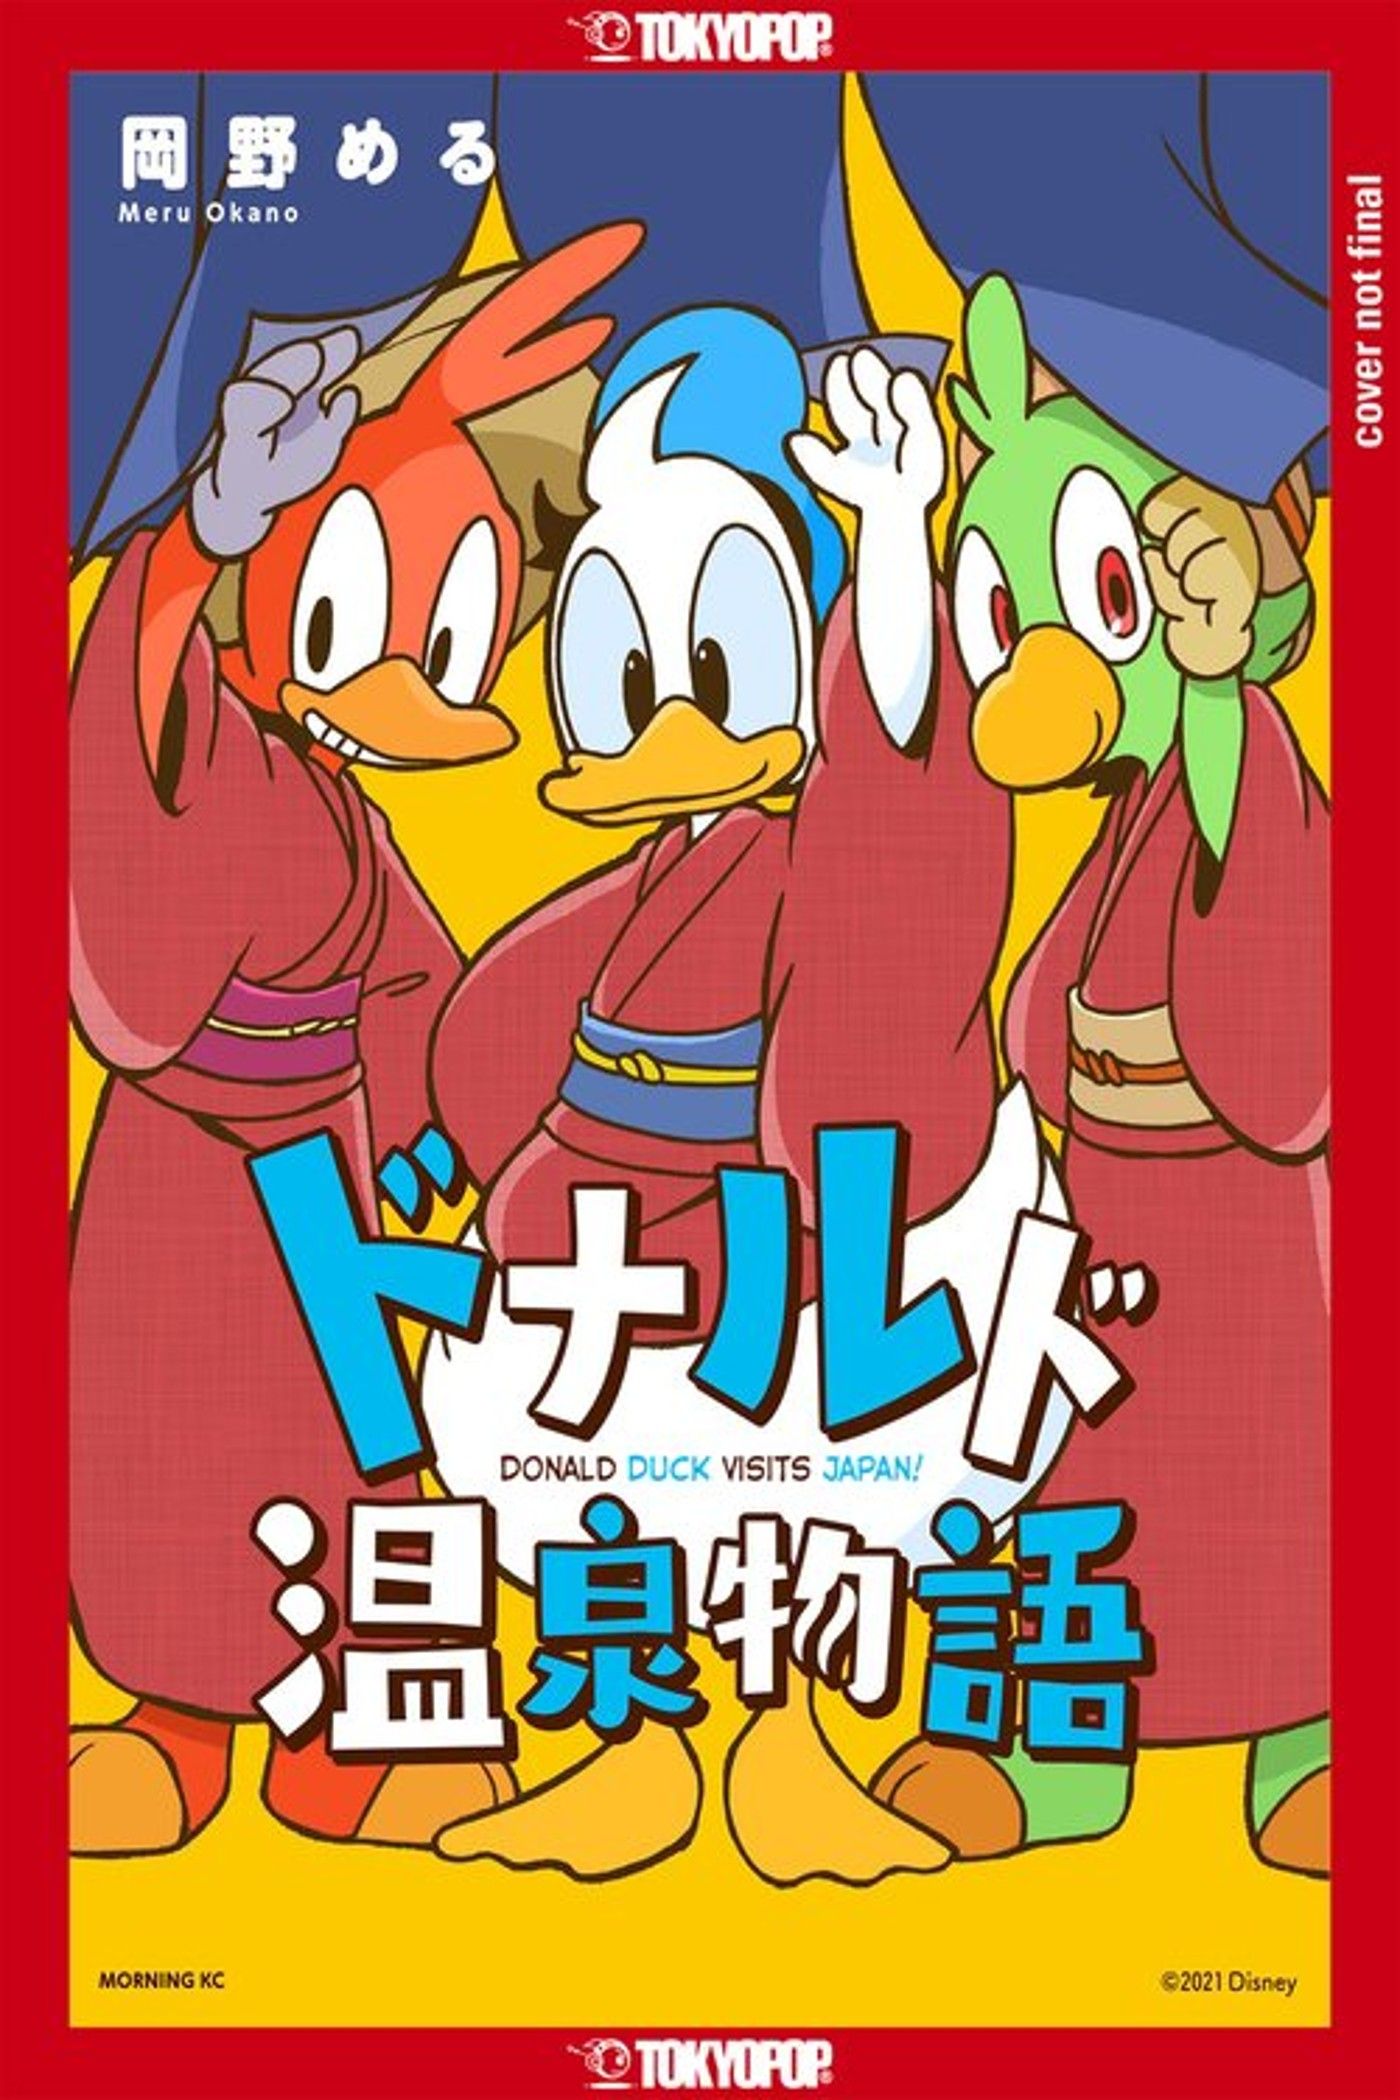 Donald Duck’s Three Caballeros Head to Japan in New Disney Manga